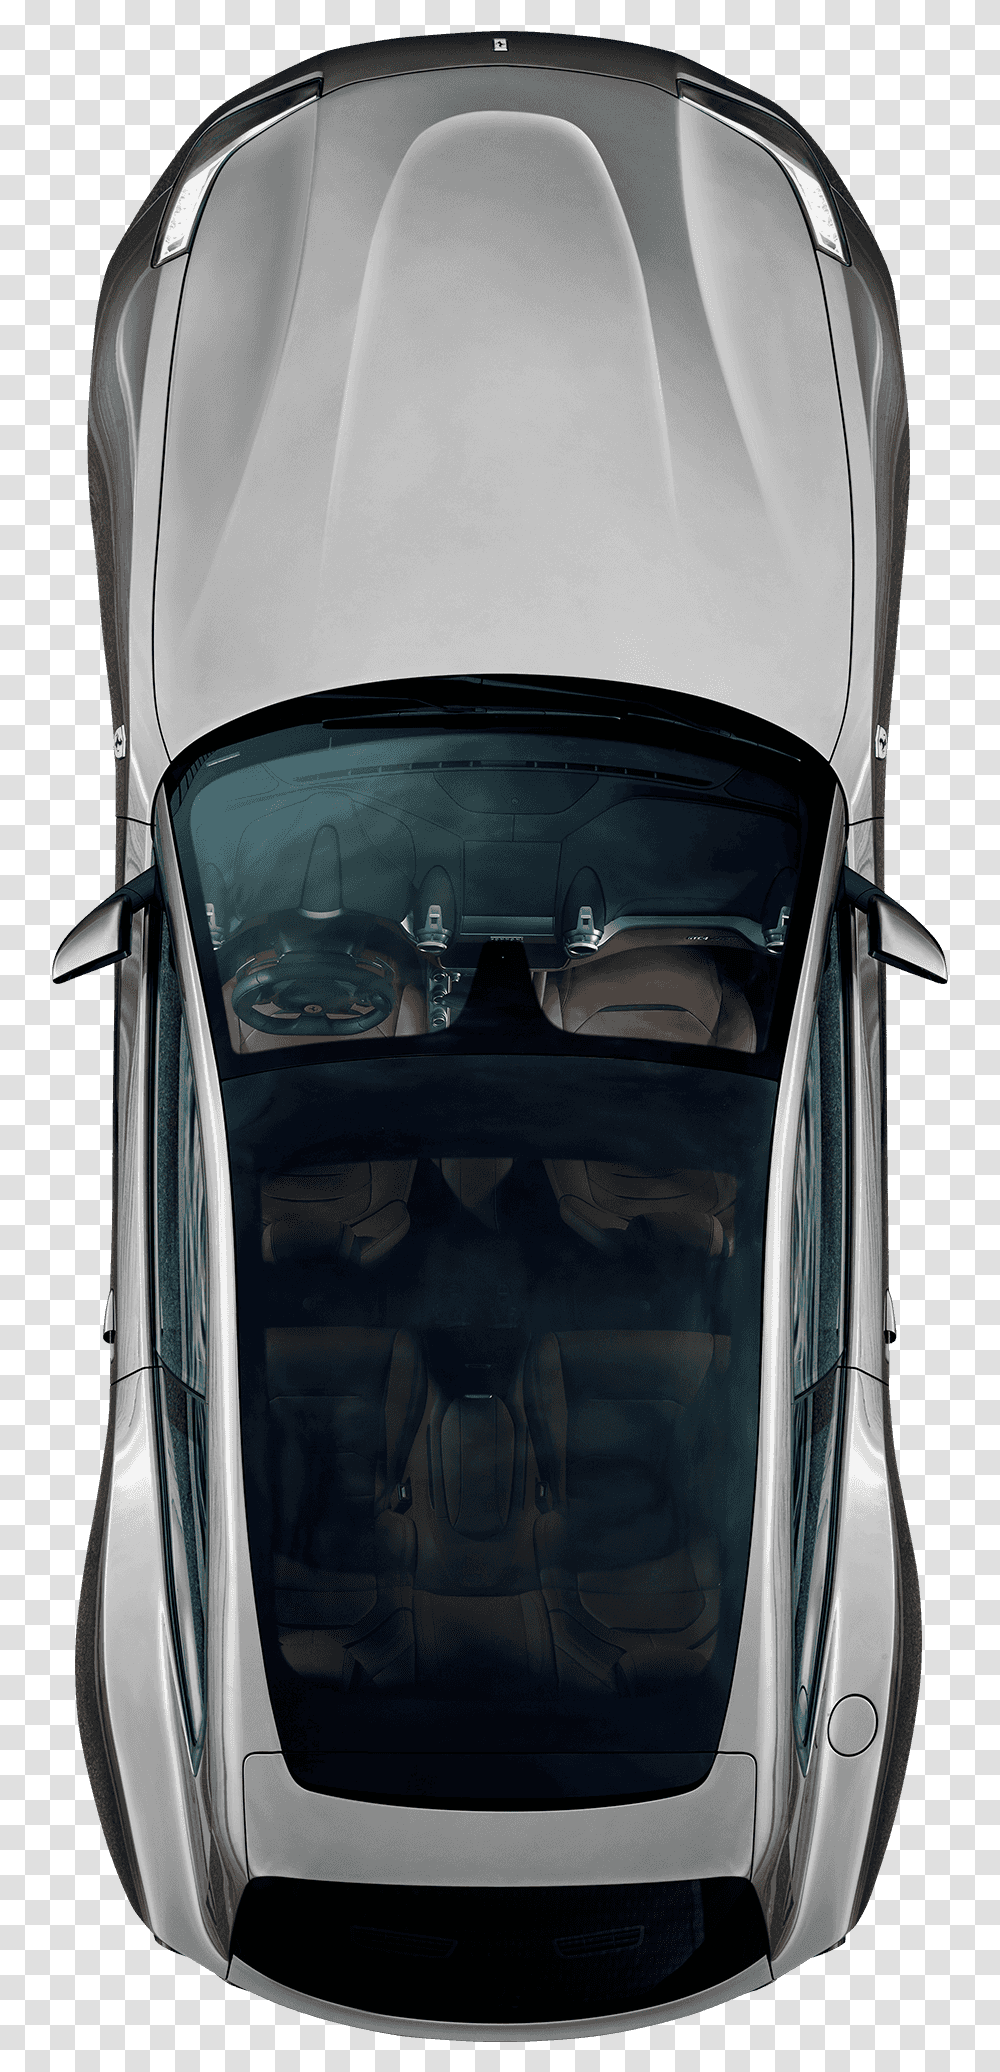 Download Hd Car Top View Ferrari Animated Car Top View Car From Top View, Tire, Light, Headlight, Car Wheel Transparent Png